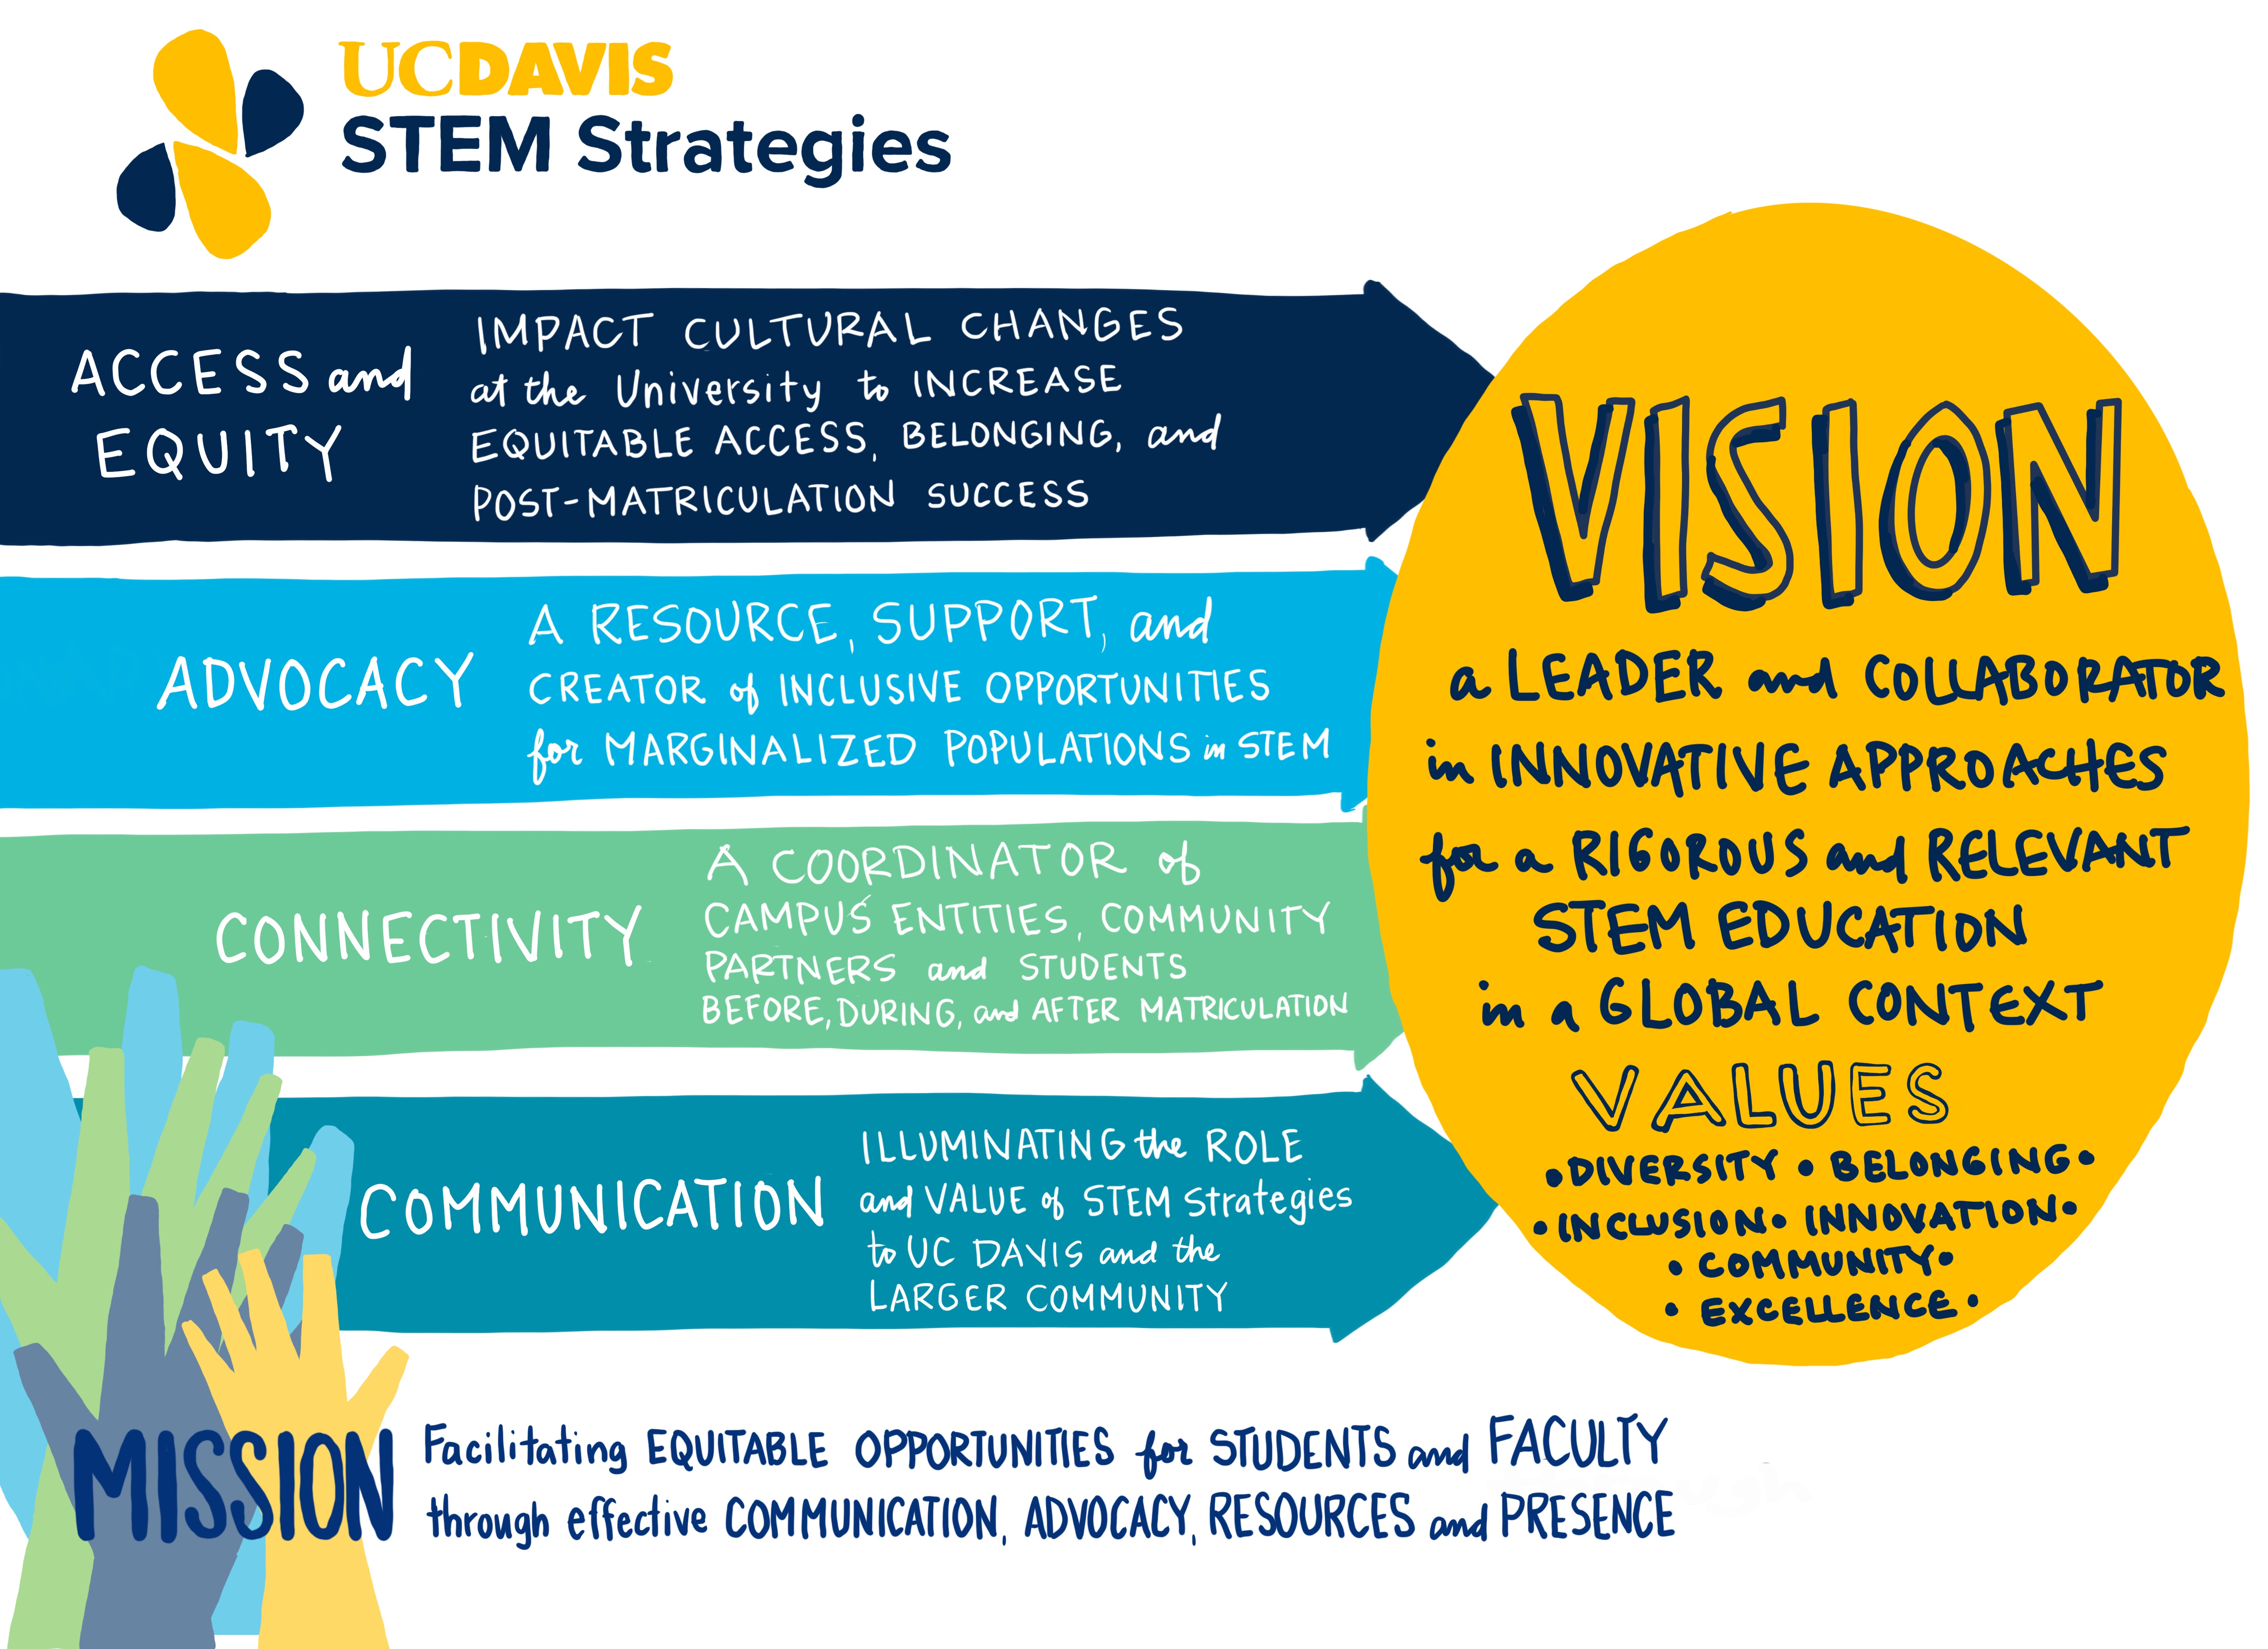 STEM Strategies strategic plan